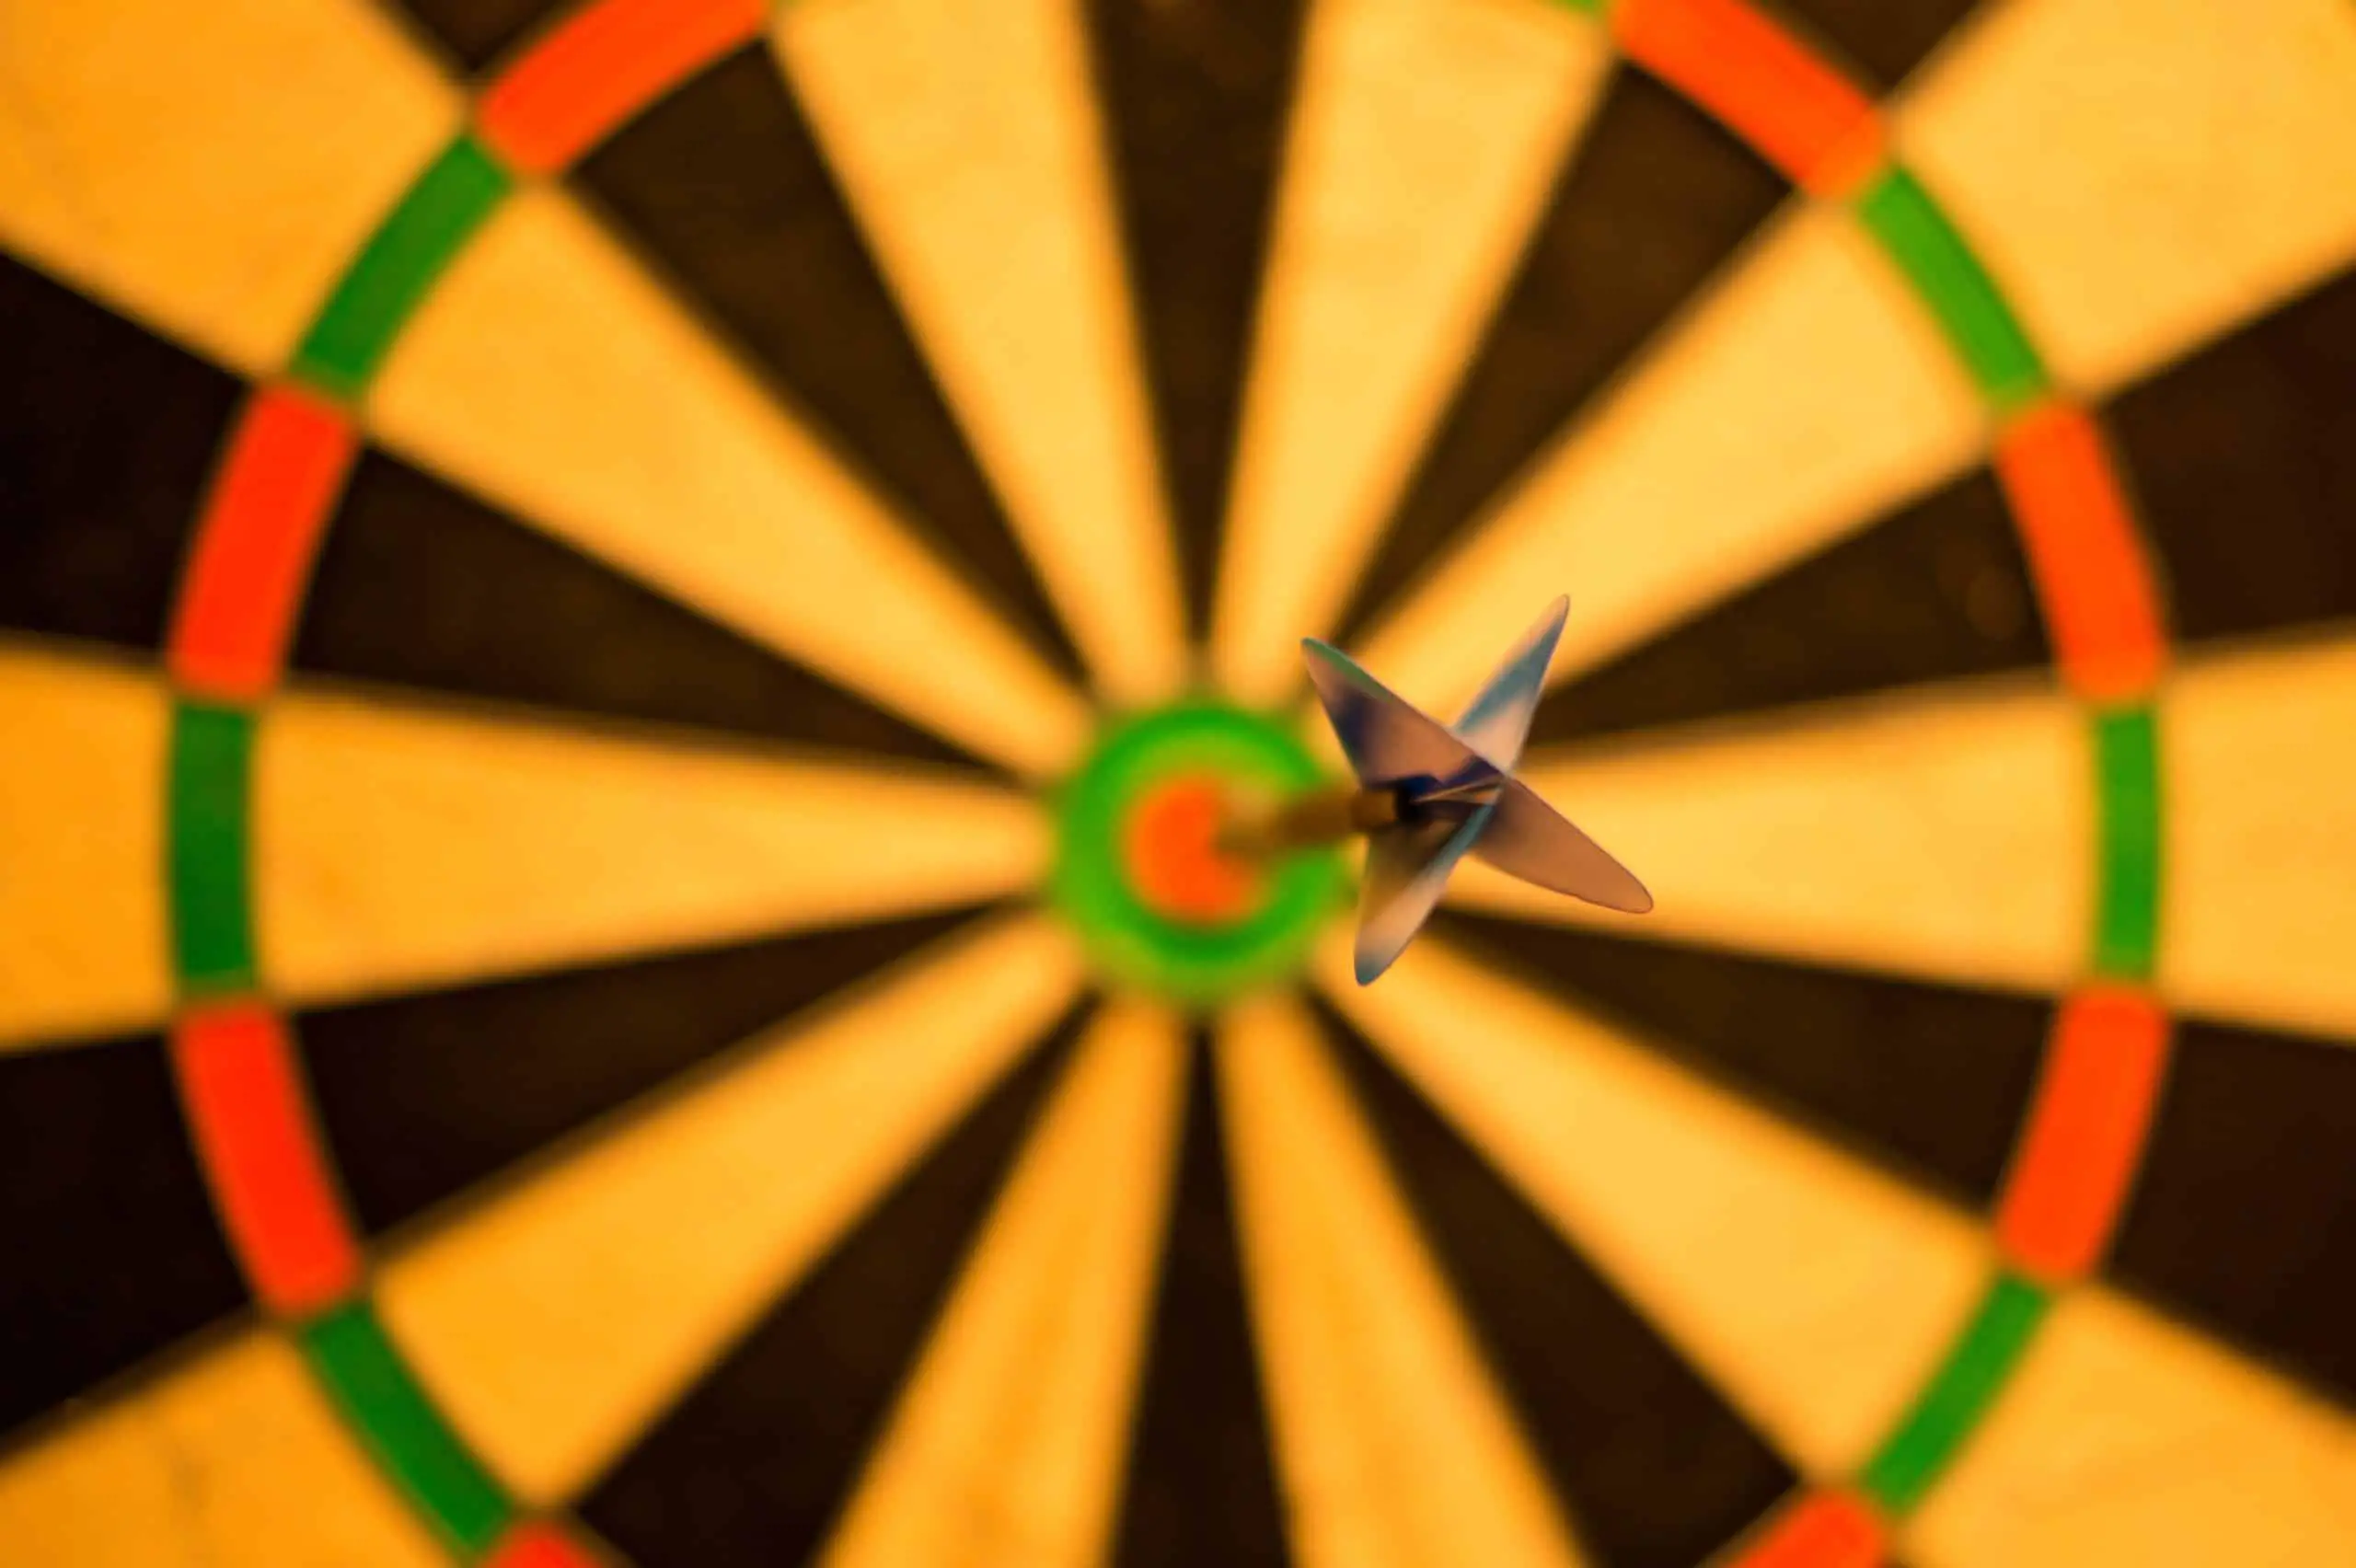 Dartboard with a dart in the bullseye